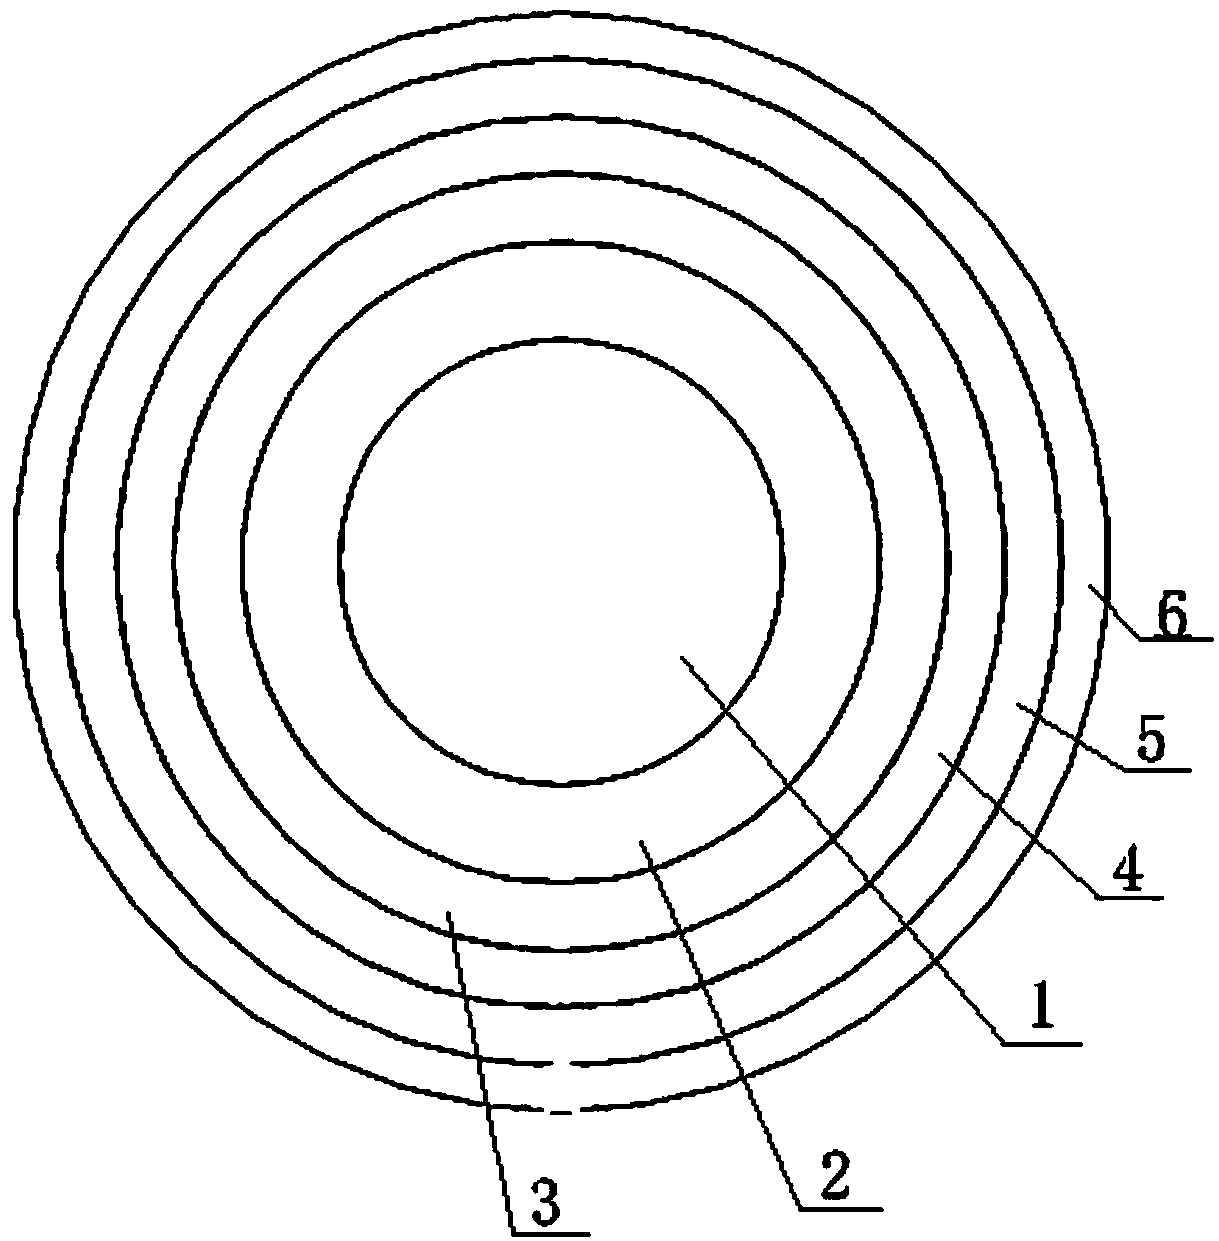 A flattened luneberg lens antenna